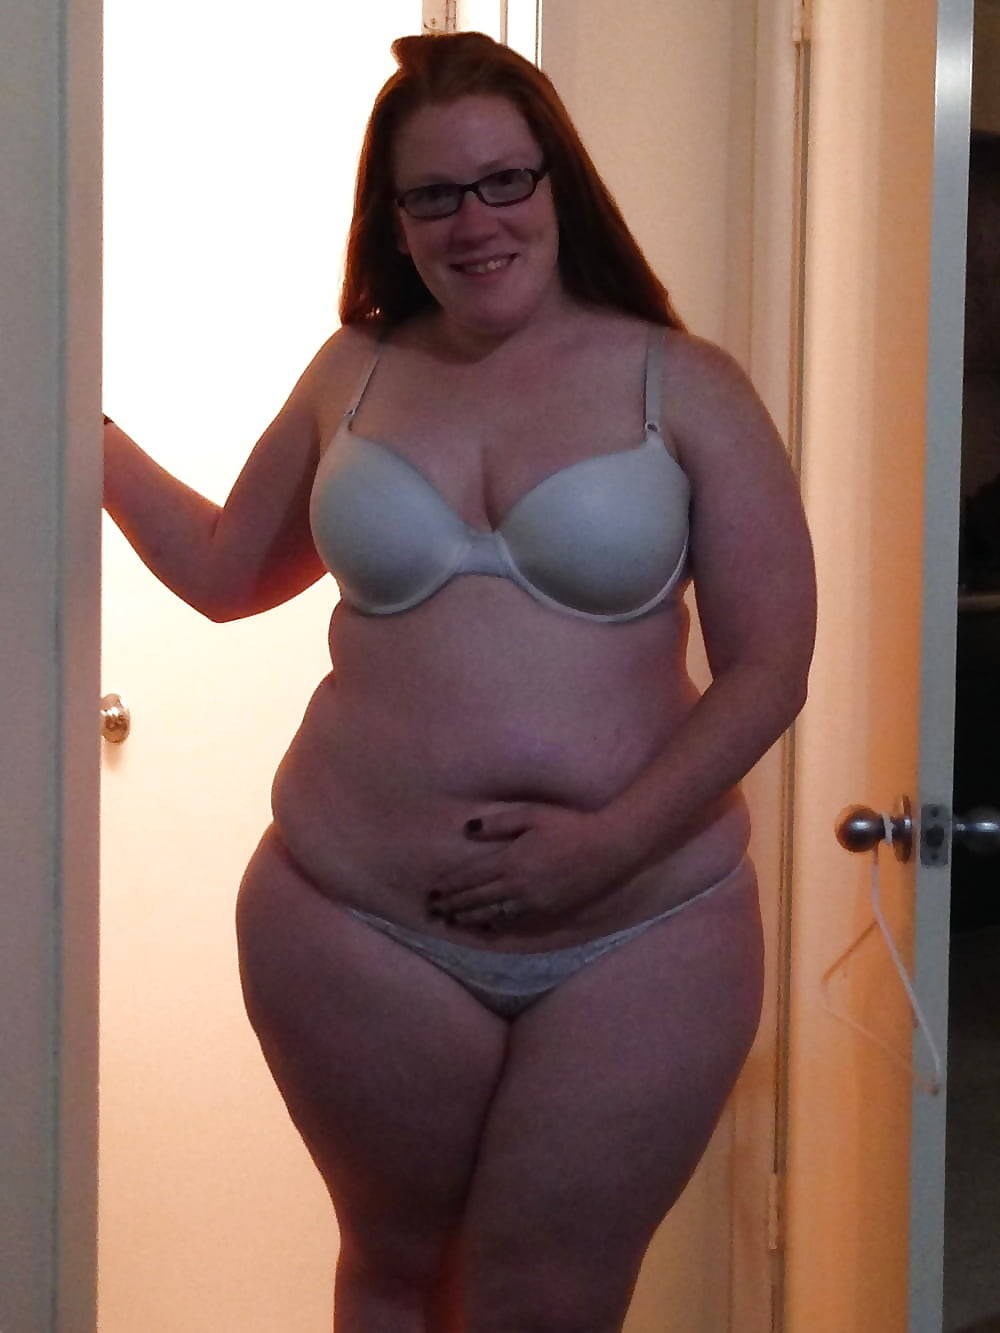 Homemade Fat Chicks - Naked Fat Chicks on Social Networks (64 photos) - sex eporner pics